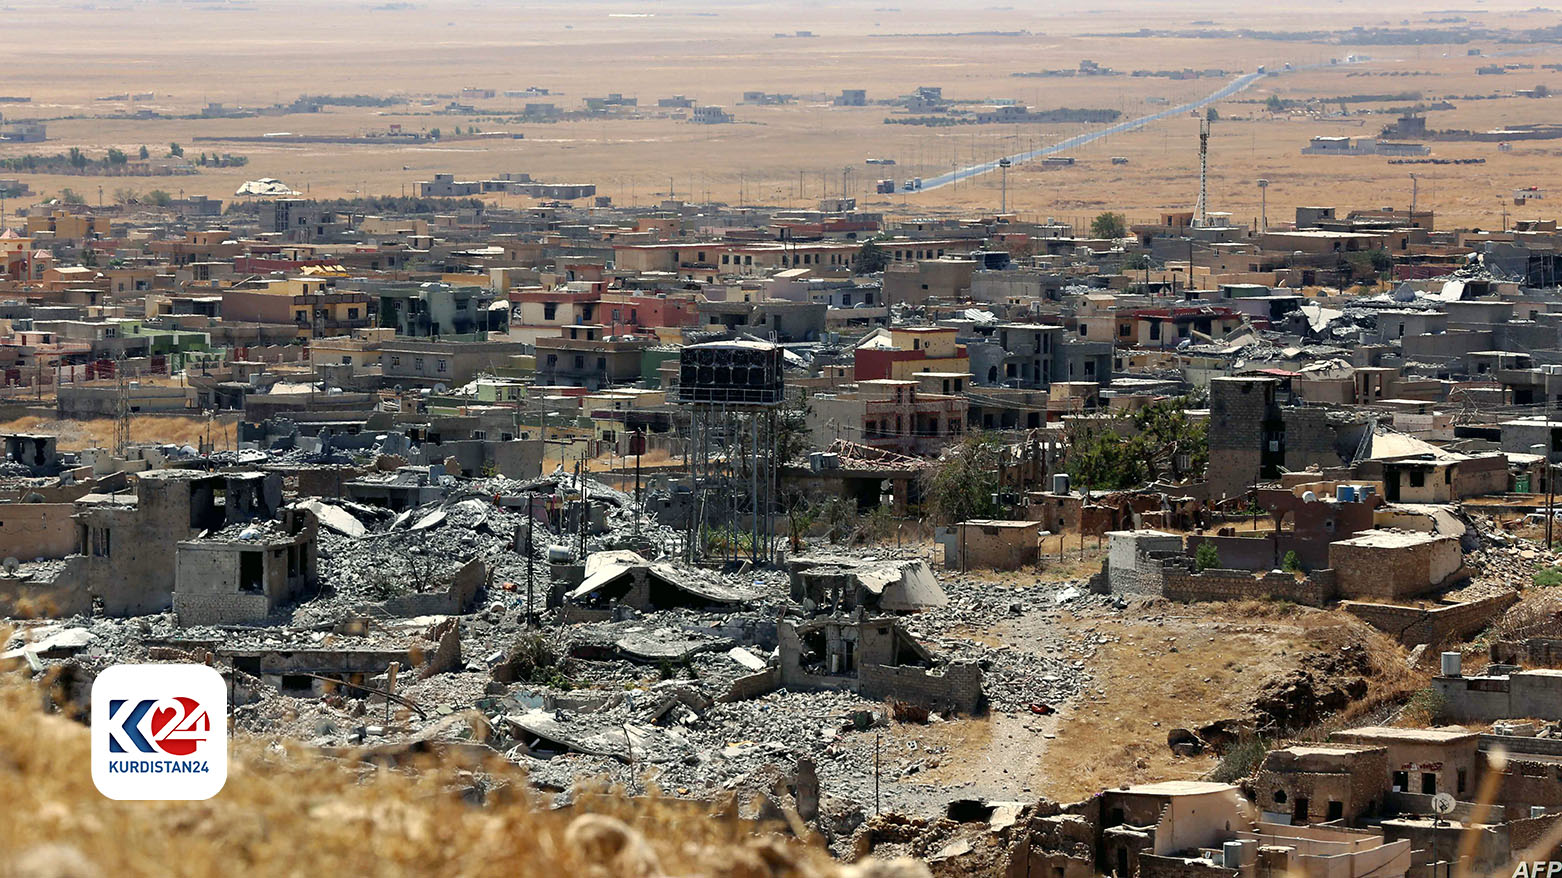 A view of a demolished house in Sinjar. (Photo: Kurdistan24)